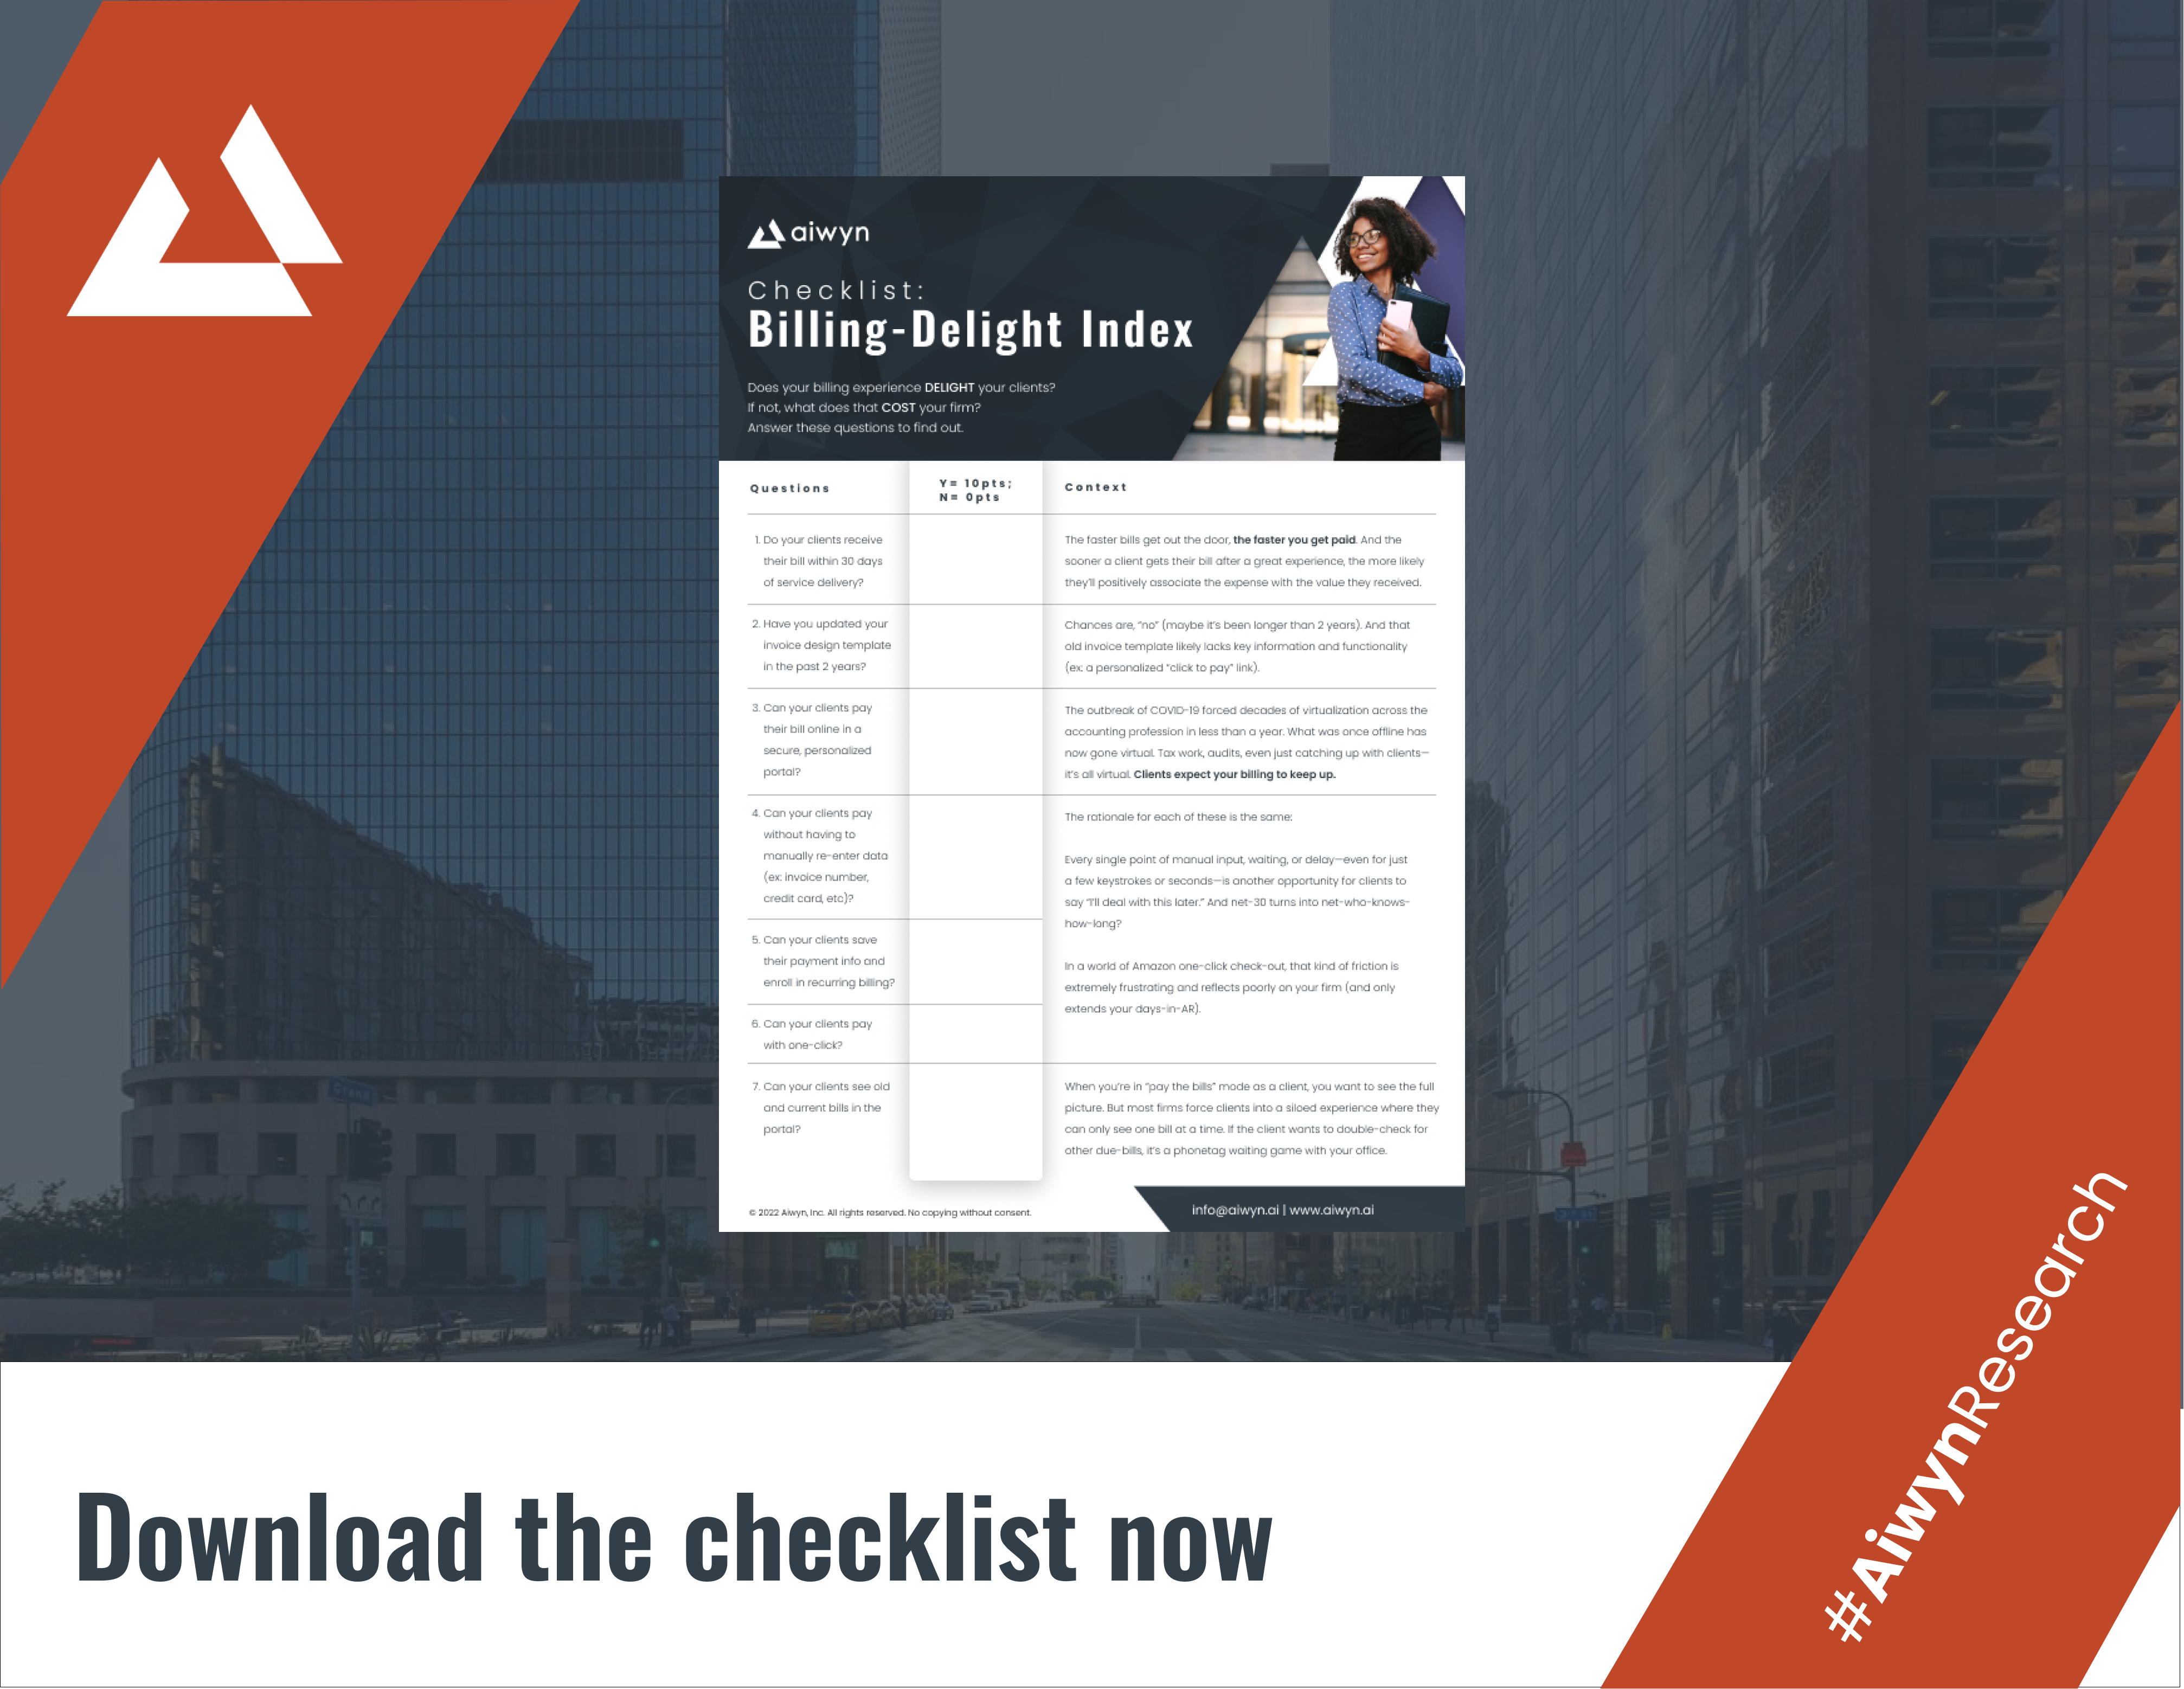 Aiwyn Research Checklist - Billing-Delight Index